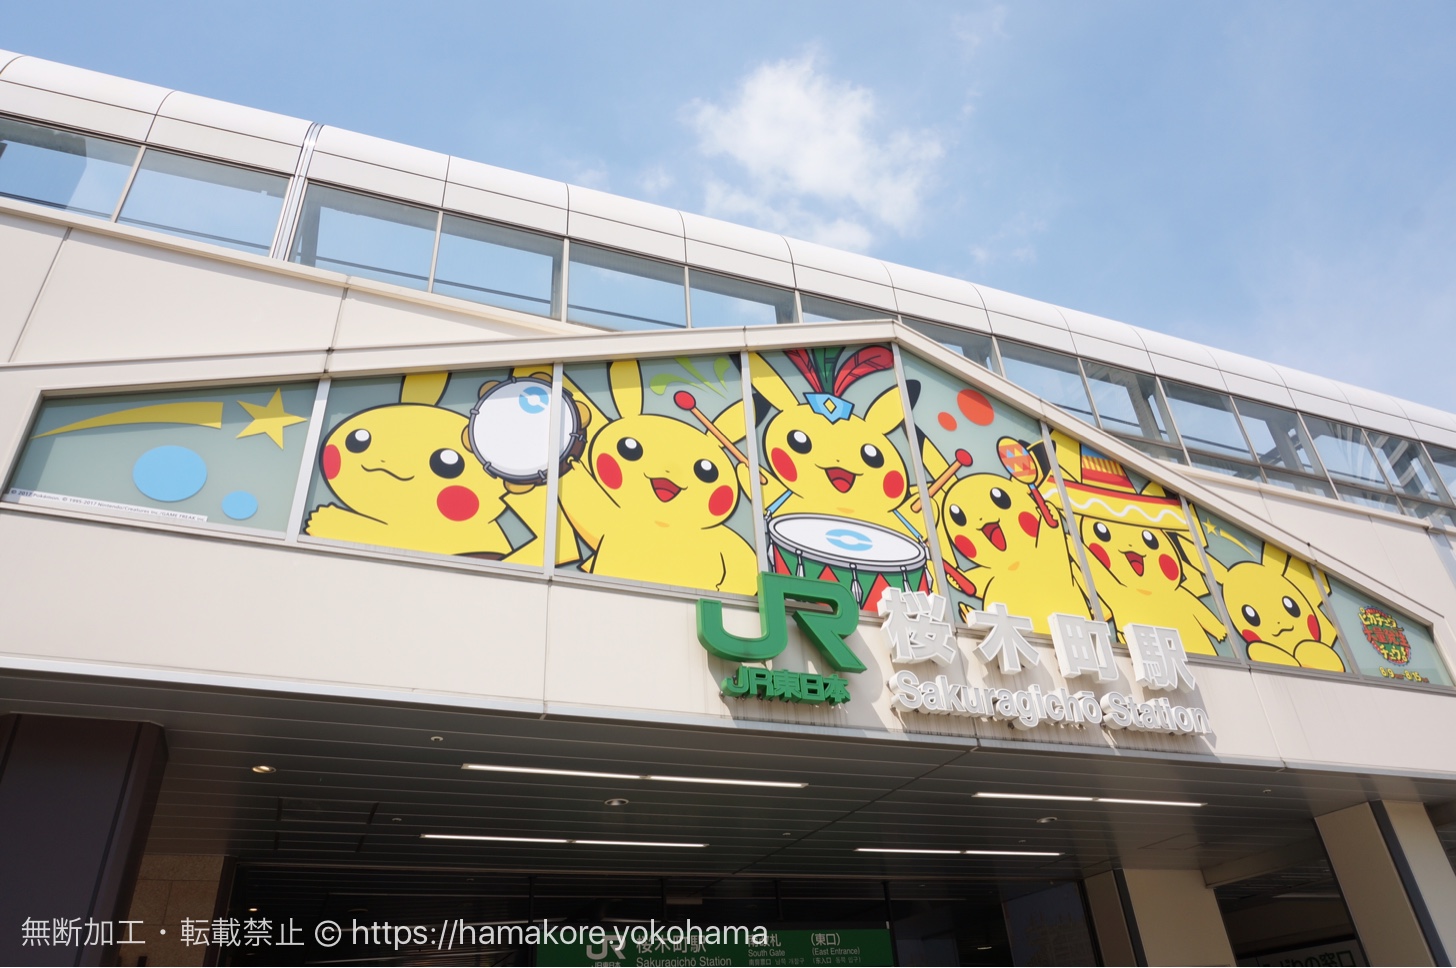 JR桜木町駅 屋外ガラス壁面のピカチュウ装飾